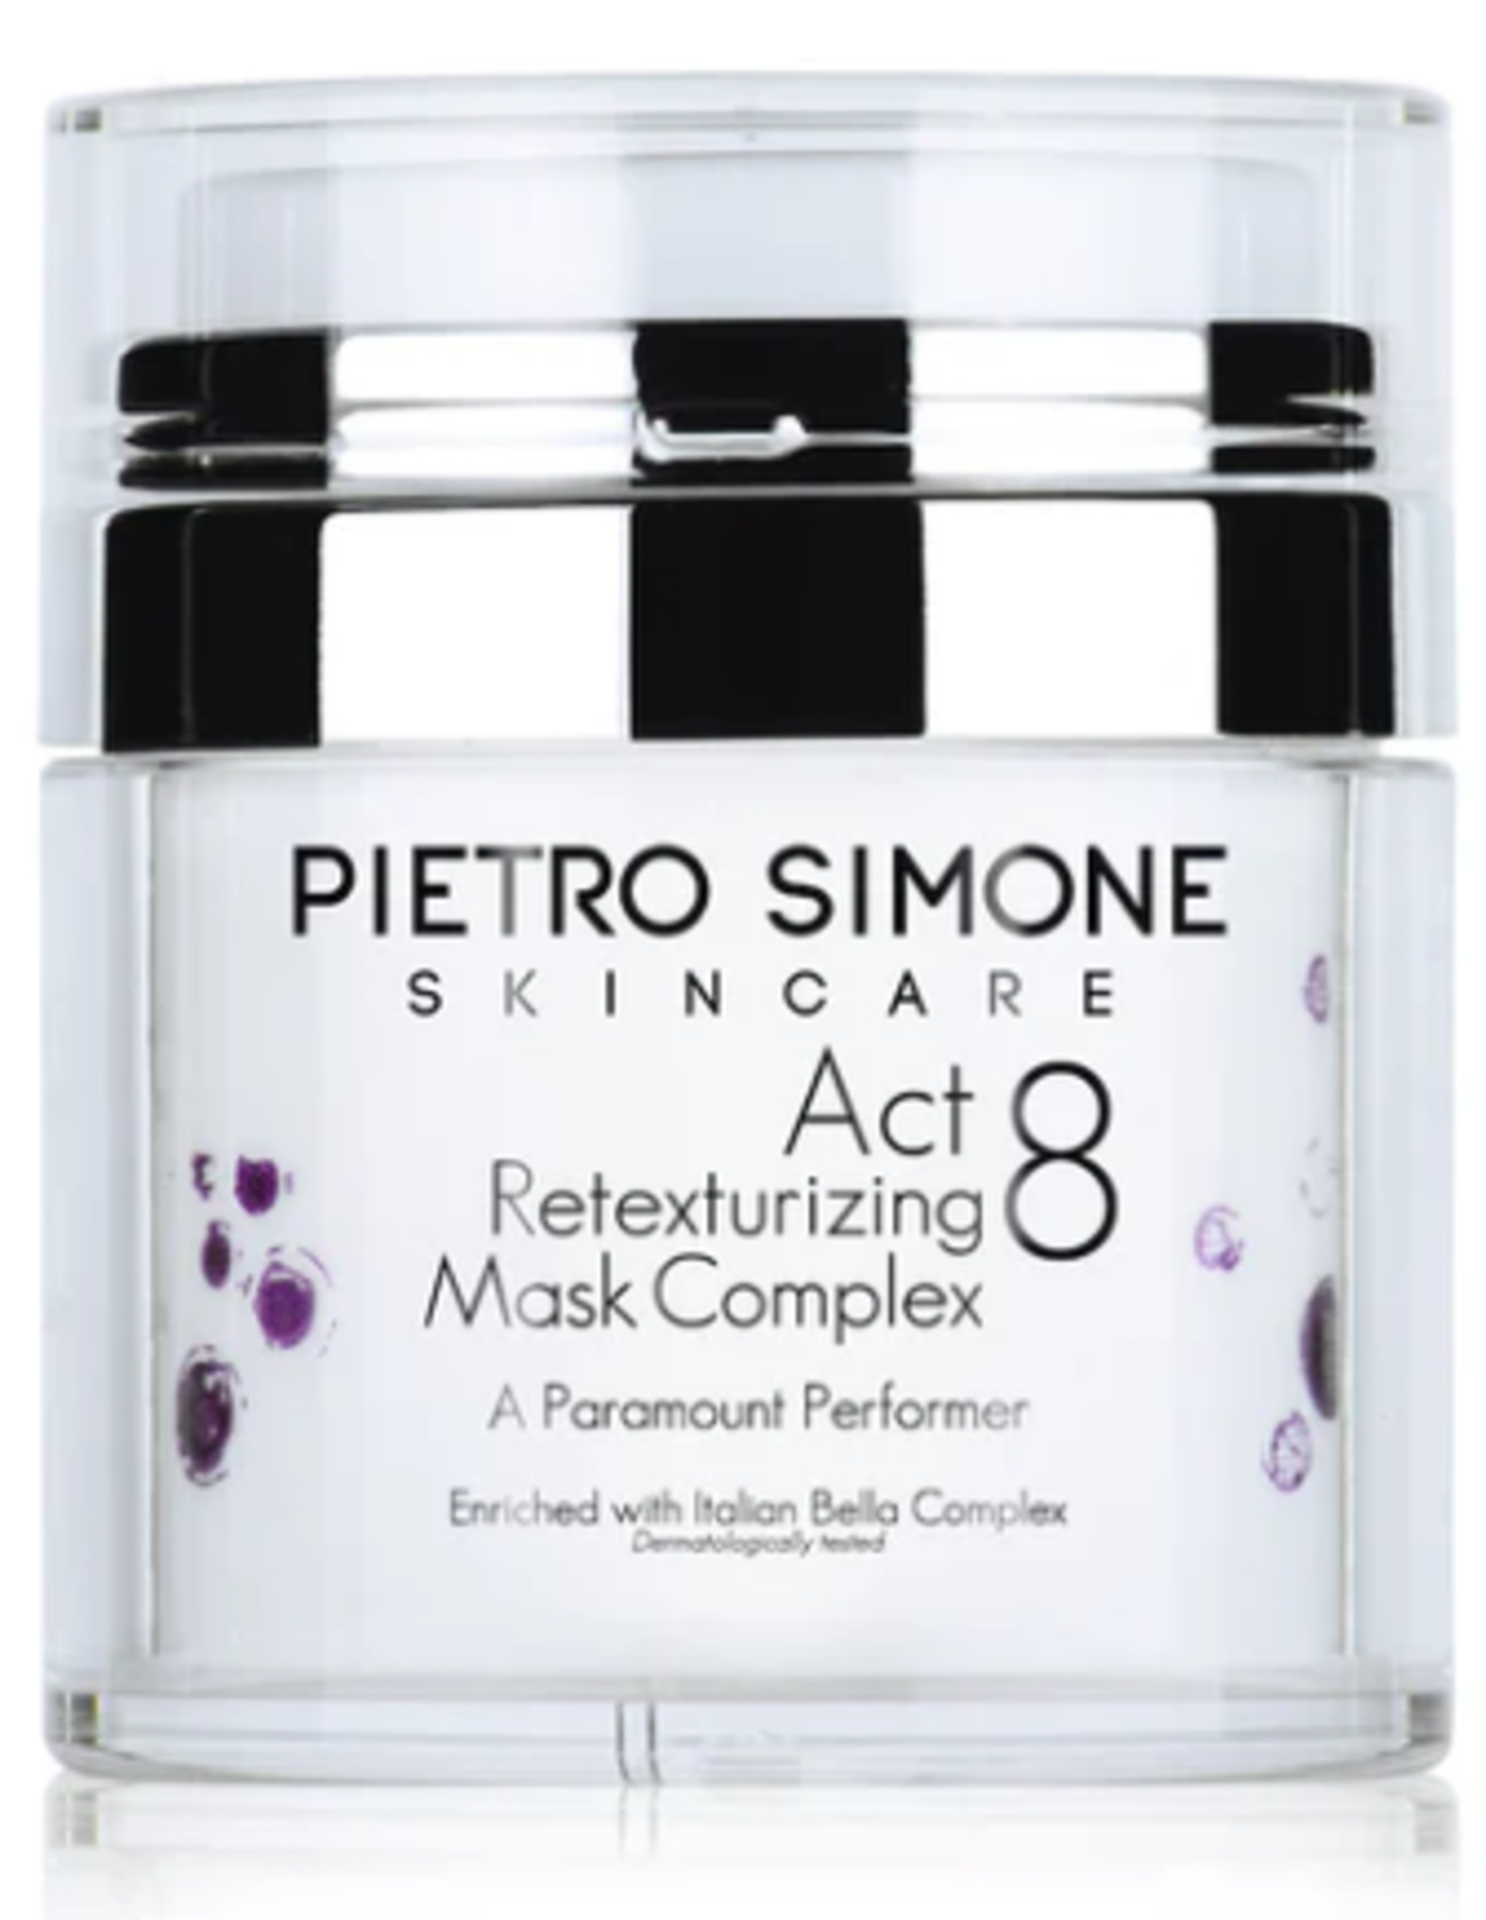 Pietro Simone Skincare: ACT 8: RETEXTURIZING MASK COMPLEX 50ML. RRP £75.00. Our innovative